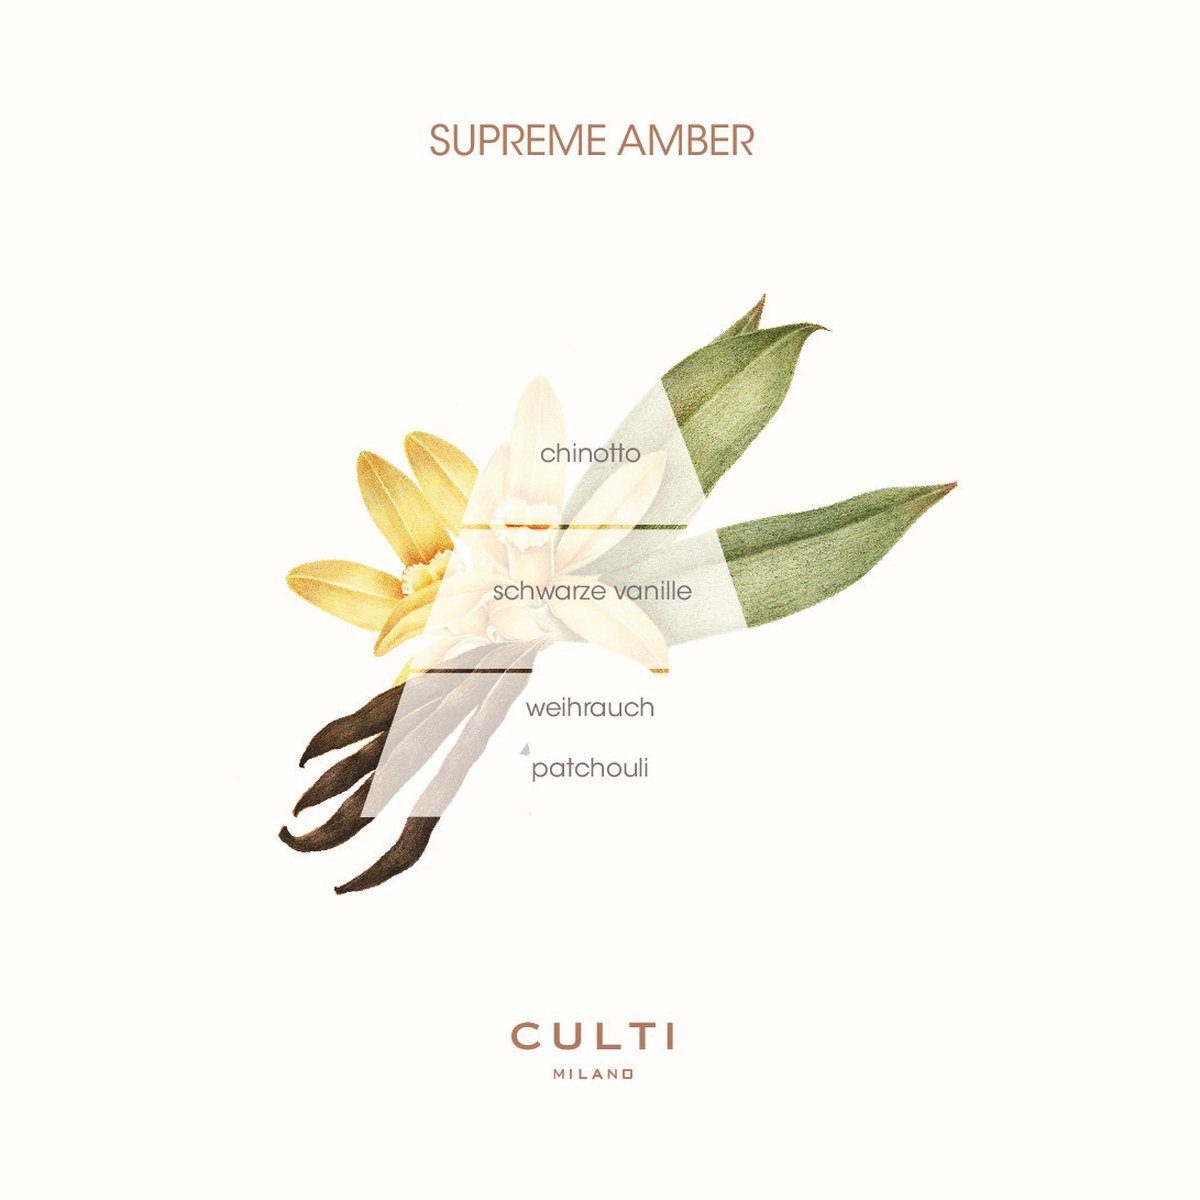 500 Raumduft Milano Culti ml Decor Amber Supreme